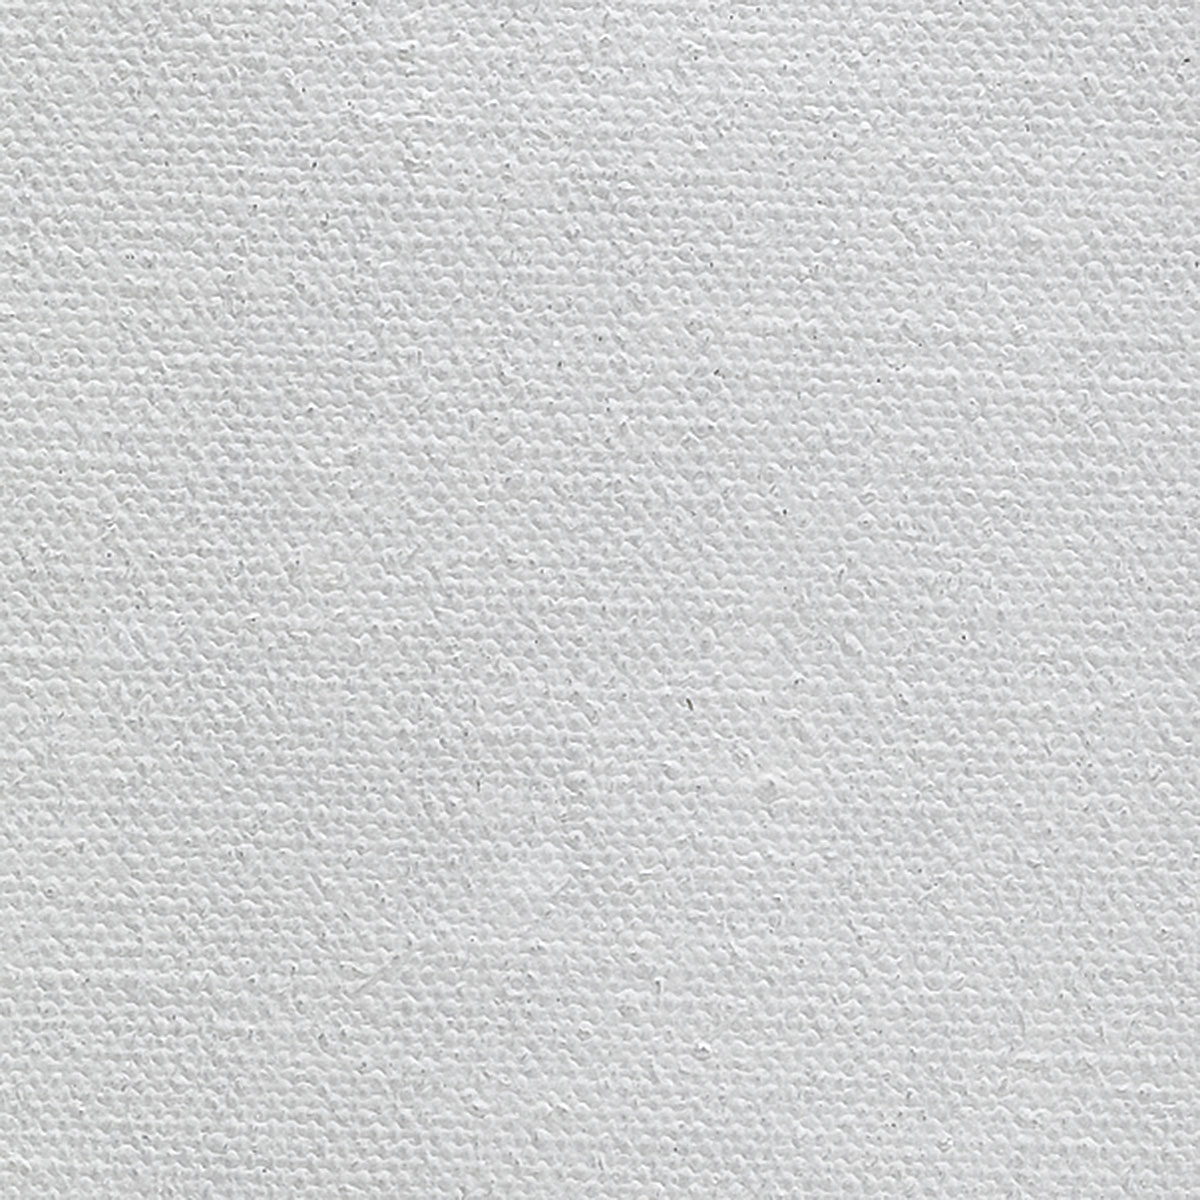 07 Oz (340 GSM) Medium Grain White Cotton Canvas Roll for Painting –  Scholar Art